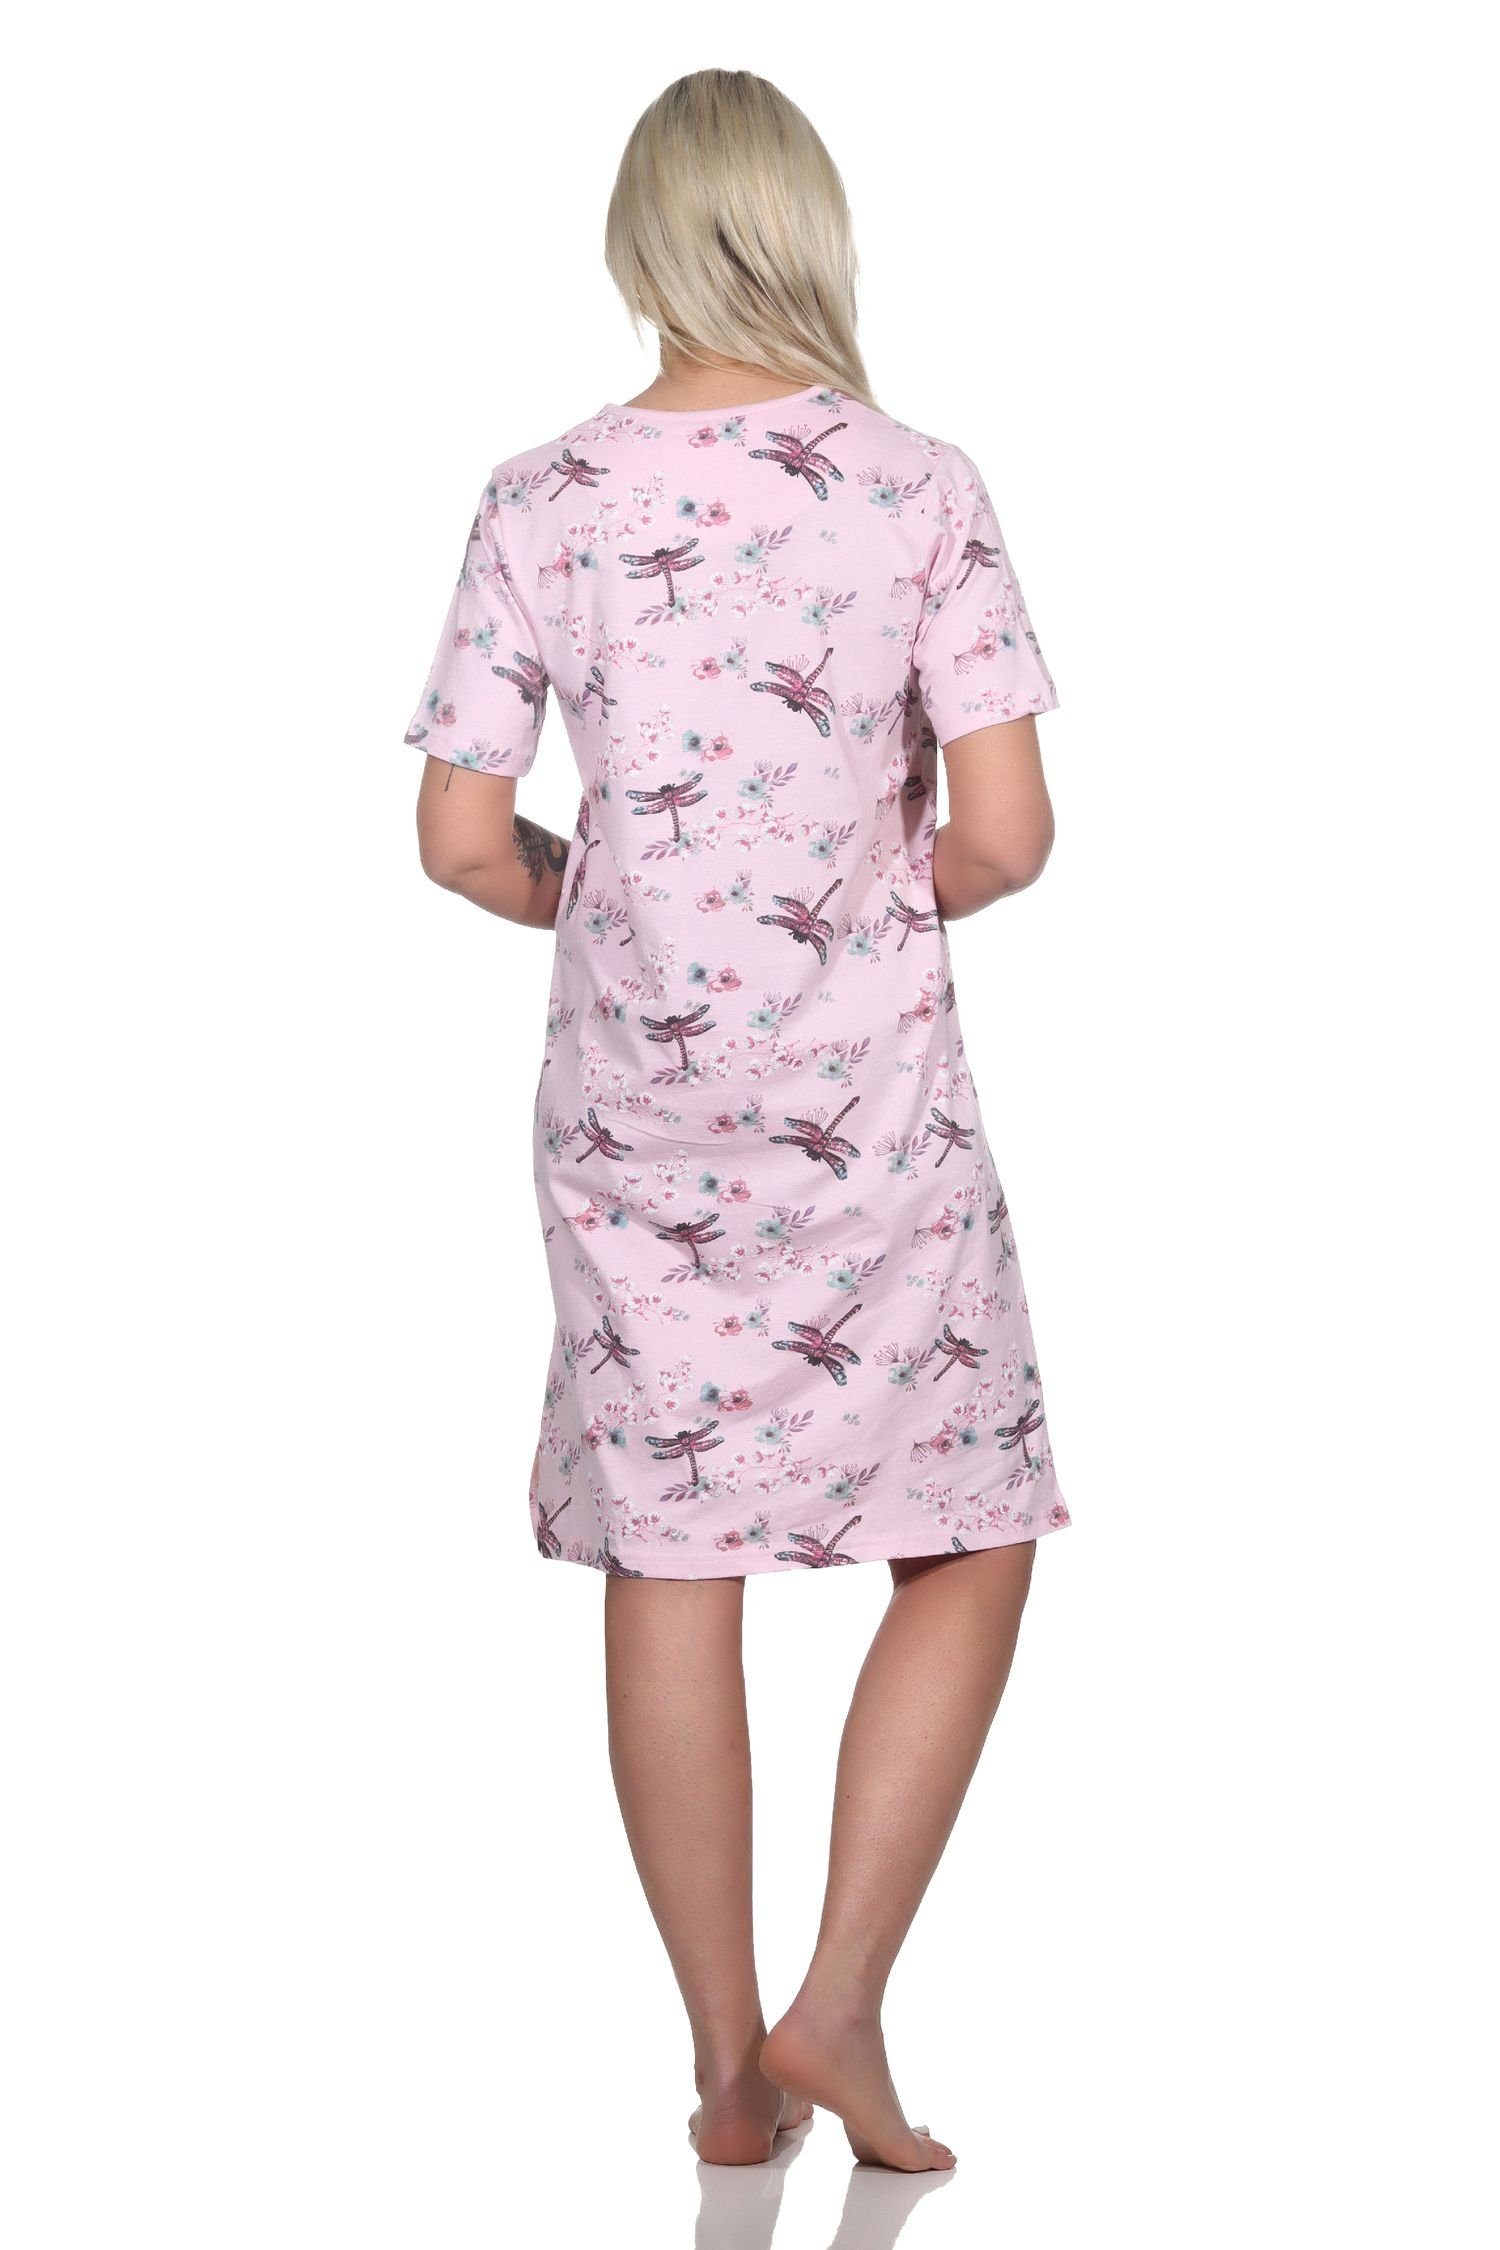 Normann Nachthemd und Alloverprint Hals am Nachthemd kurzarm Knopfleiste rosa floraler Damen